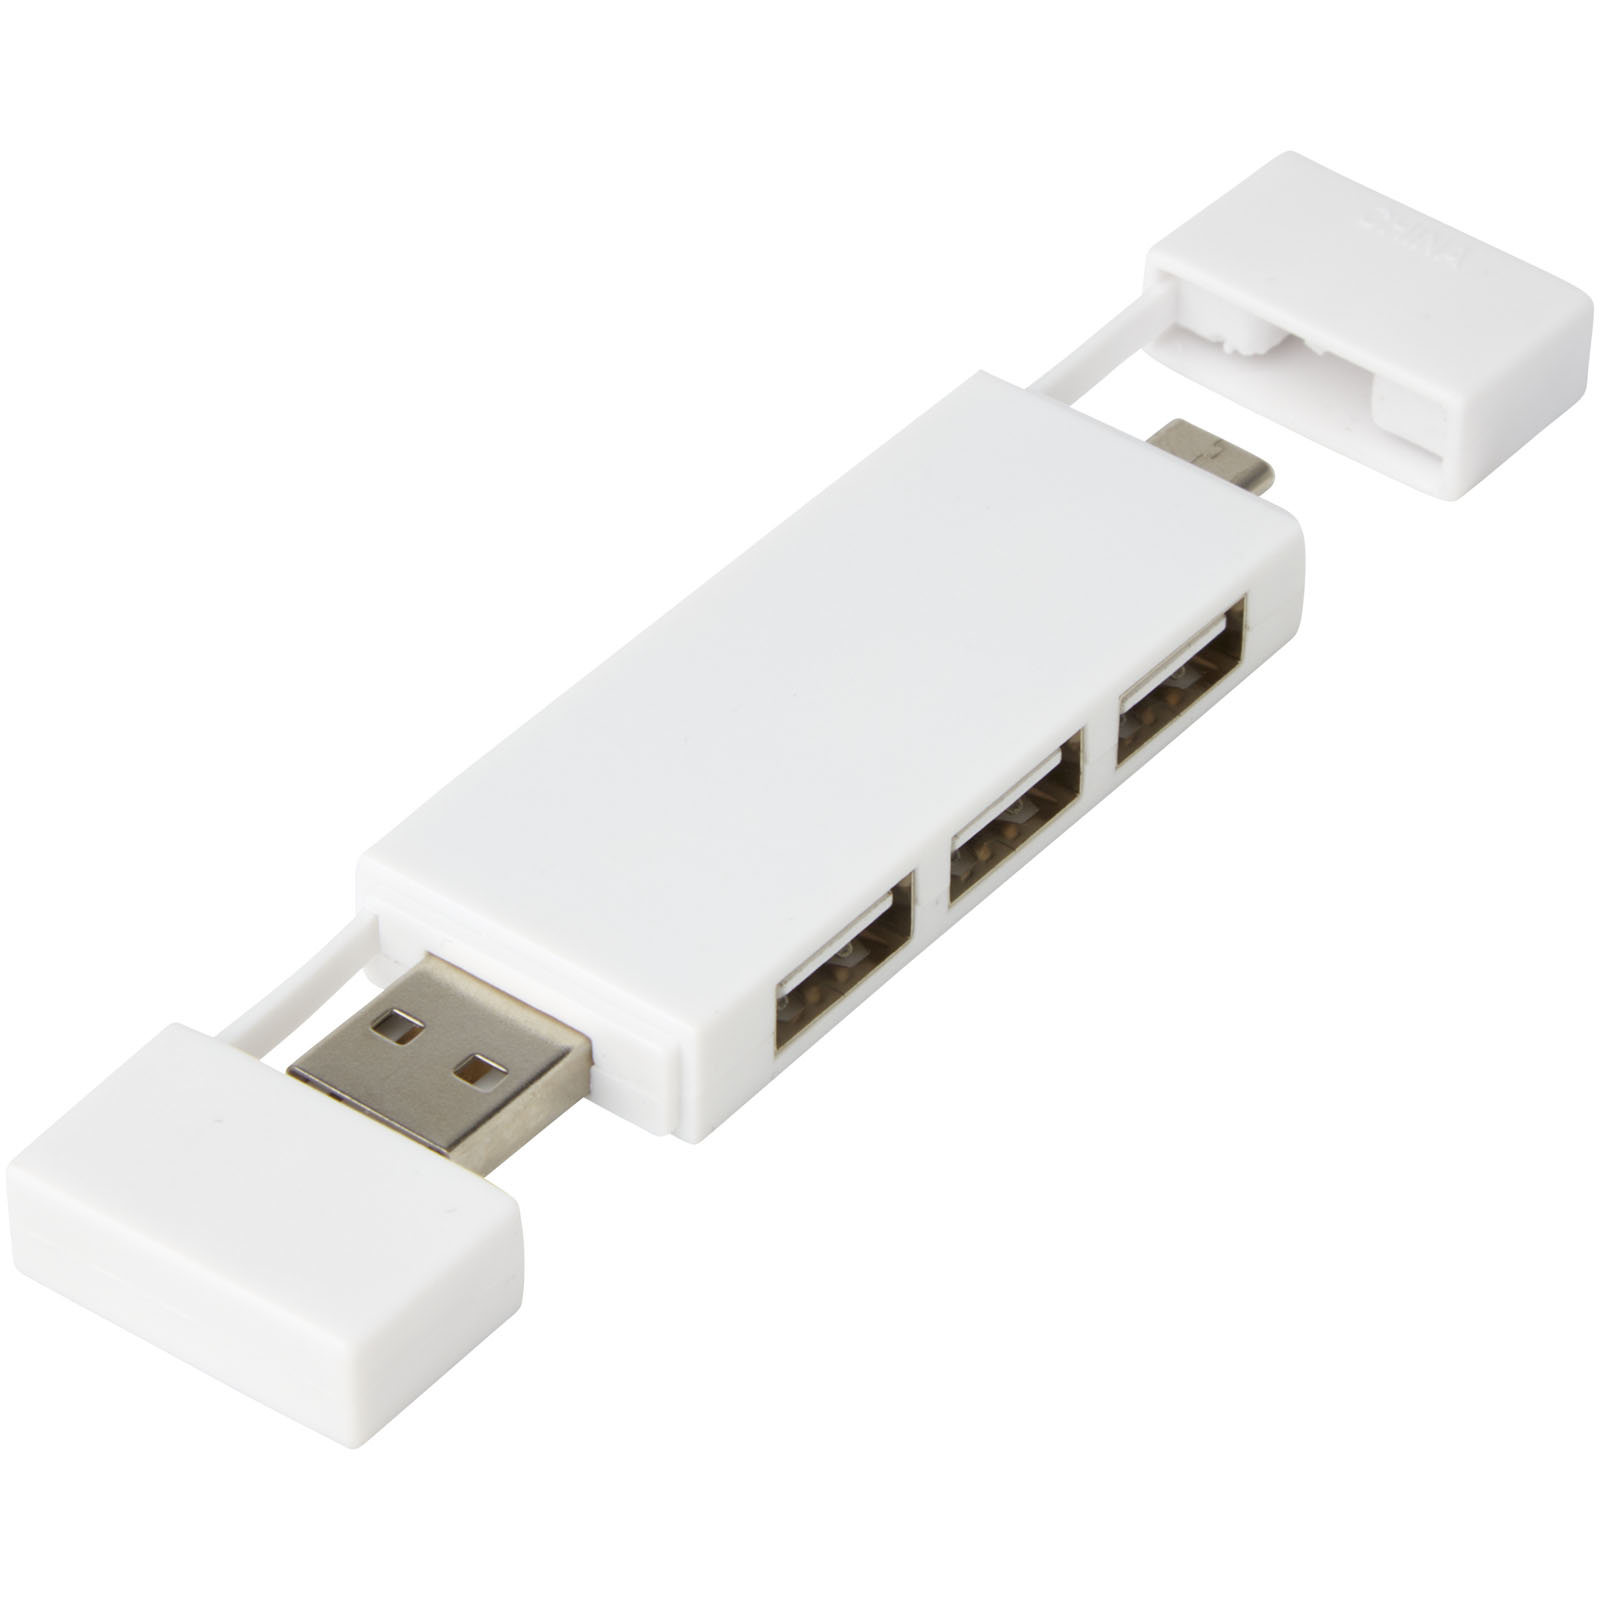 Technology - Mulan dual USB 2.0 hub